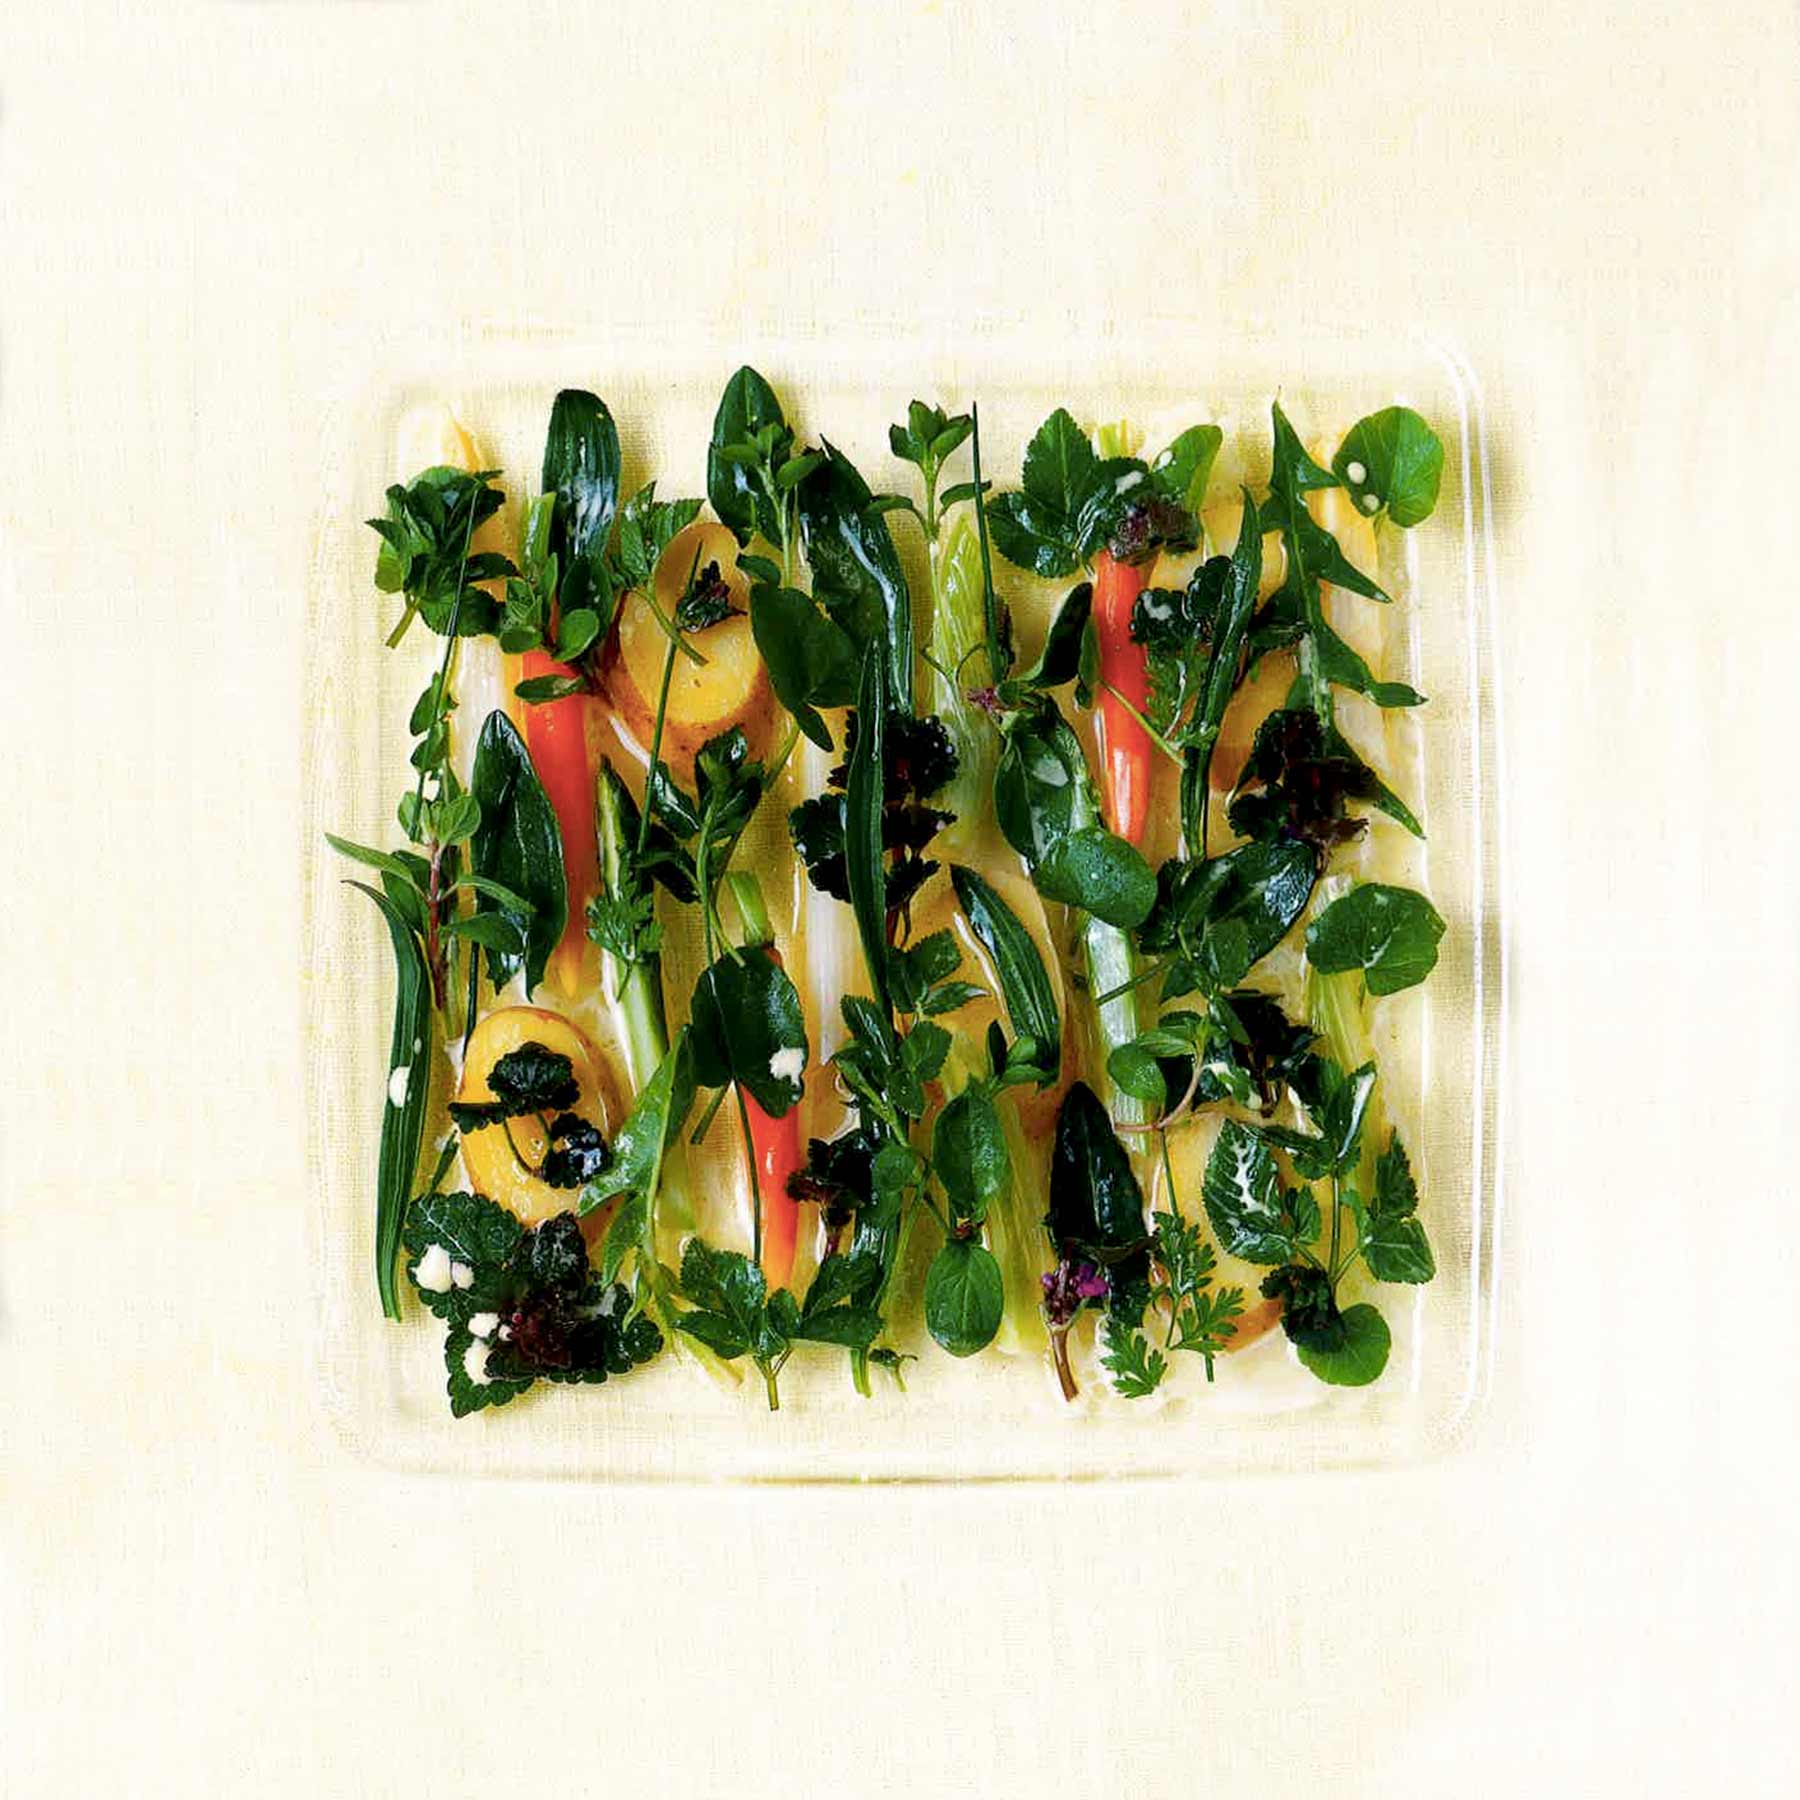 Wiesenkräuter-Salat mit Rapsöl-Vinaigrette